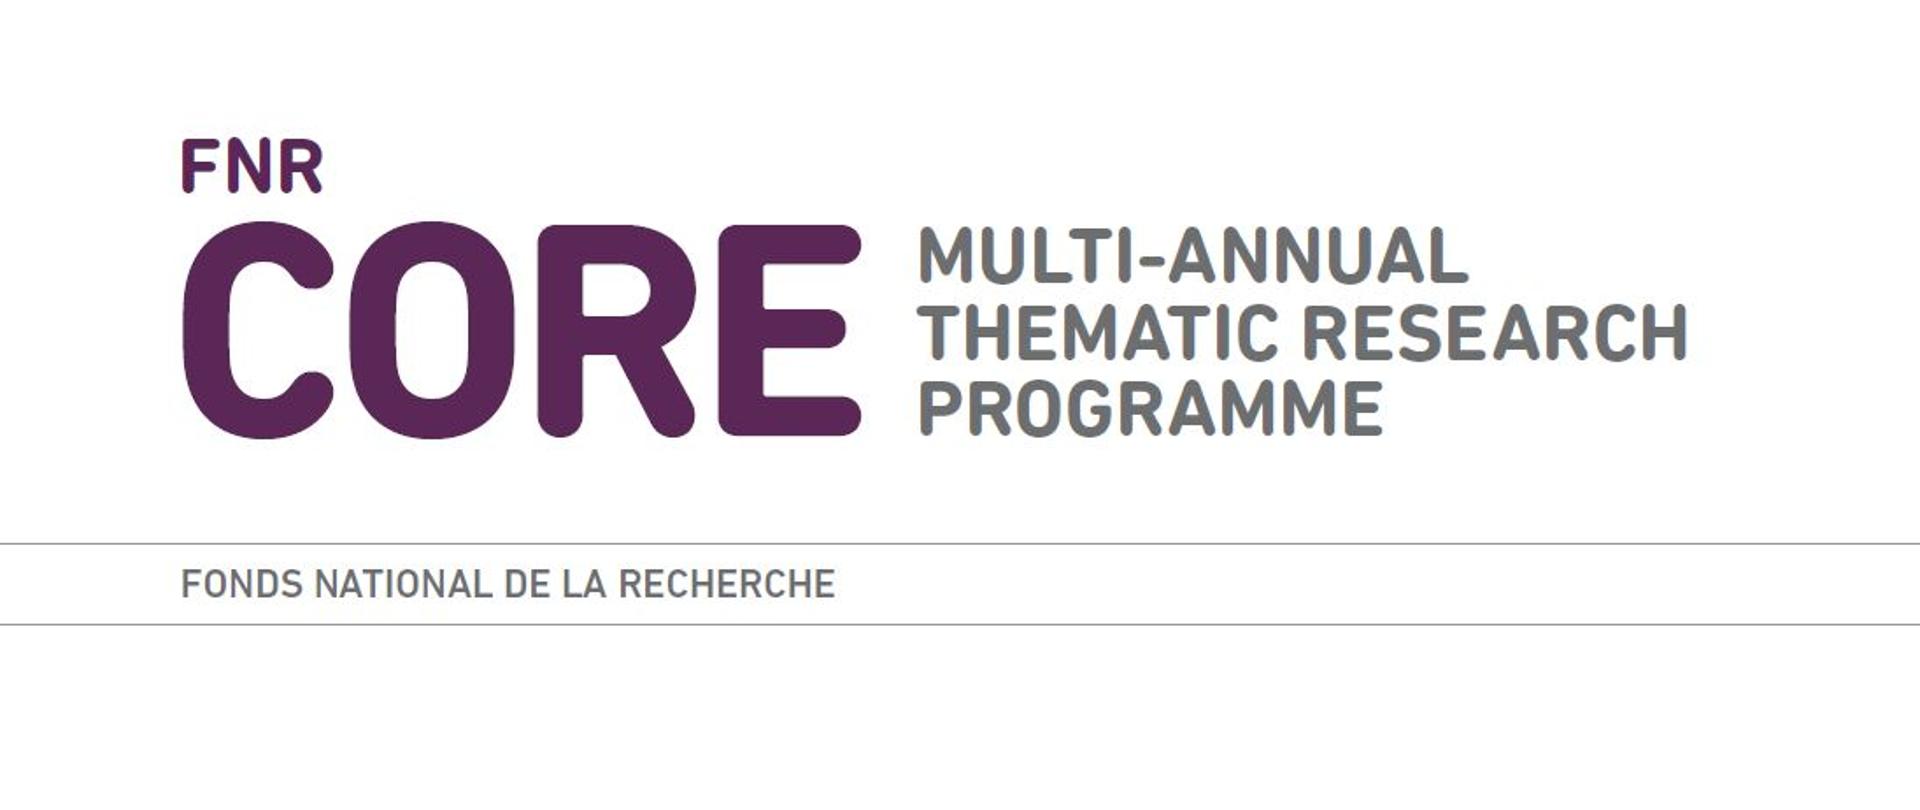 CORE multi-annual thematic research programme